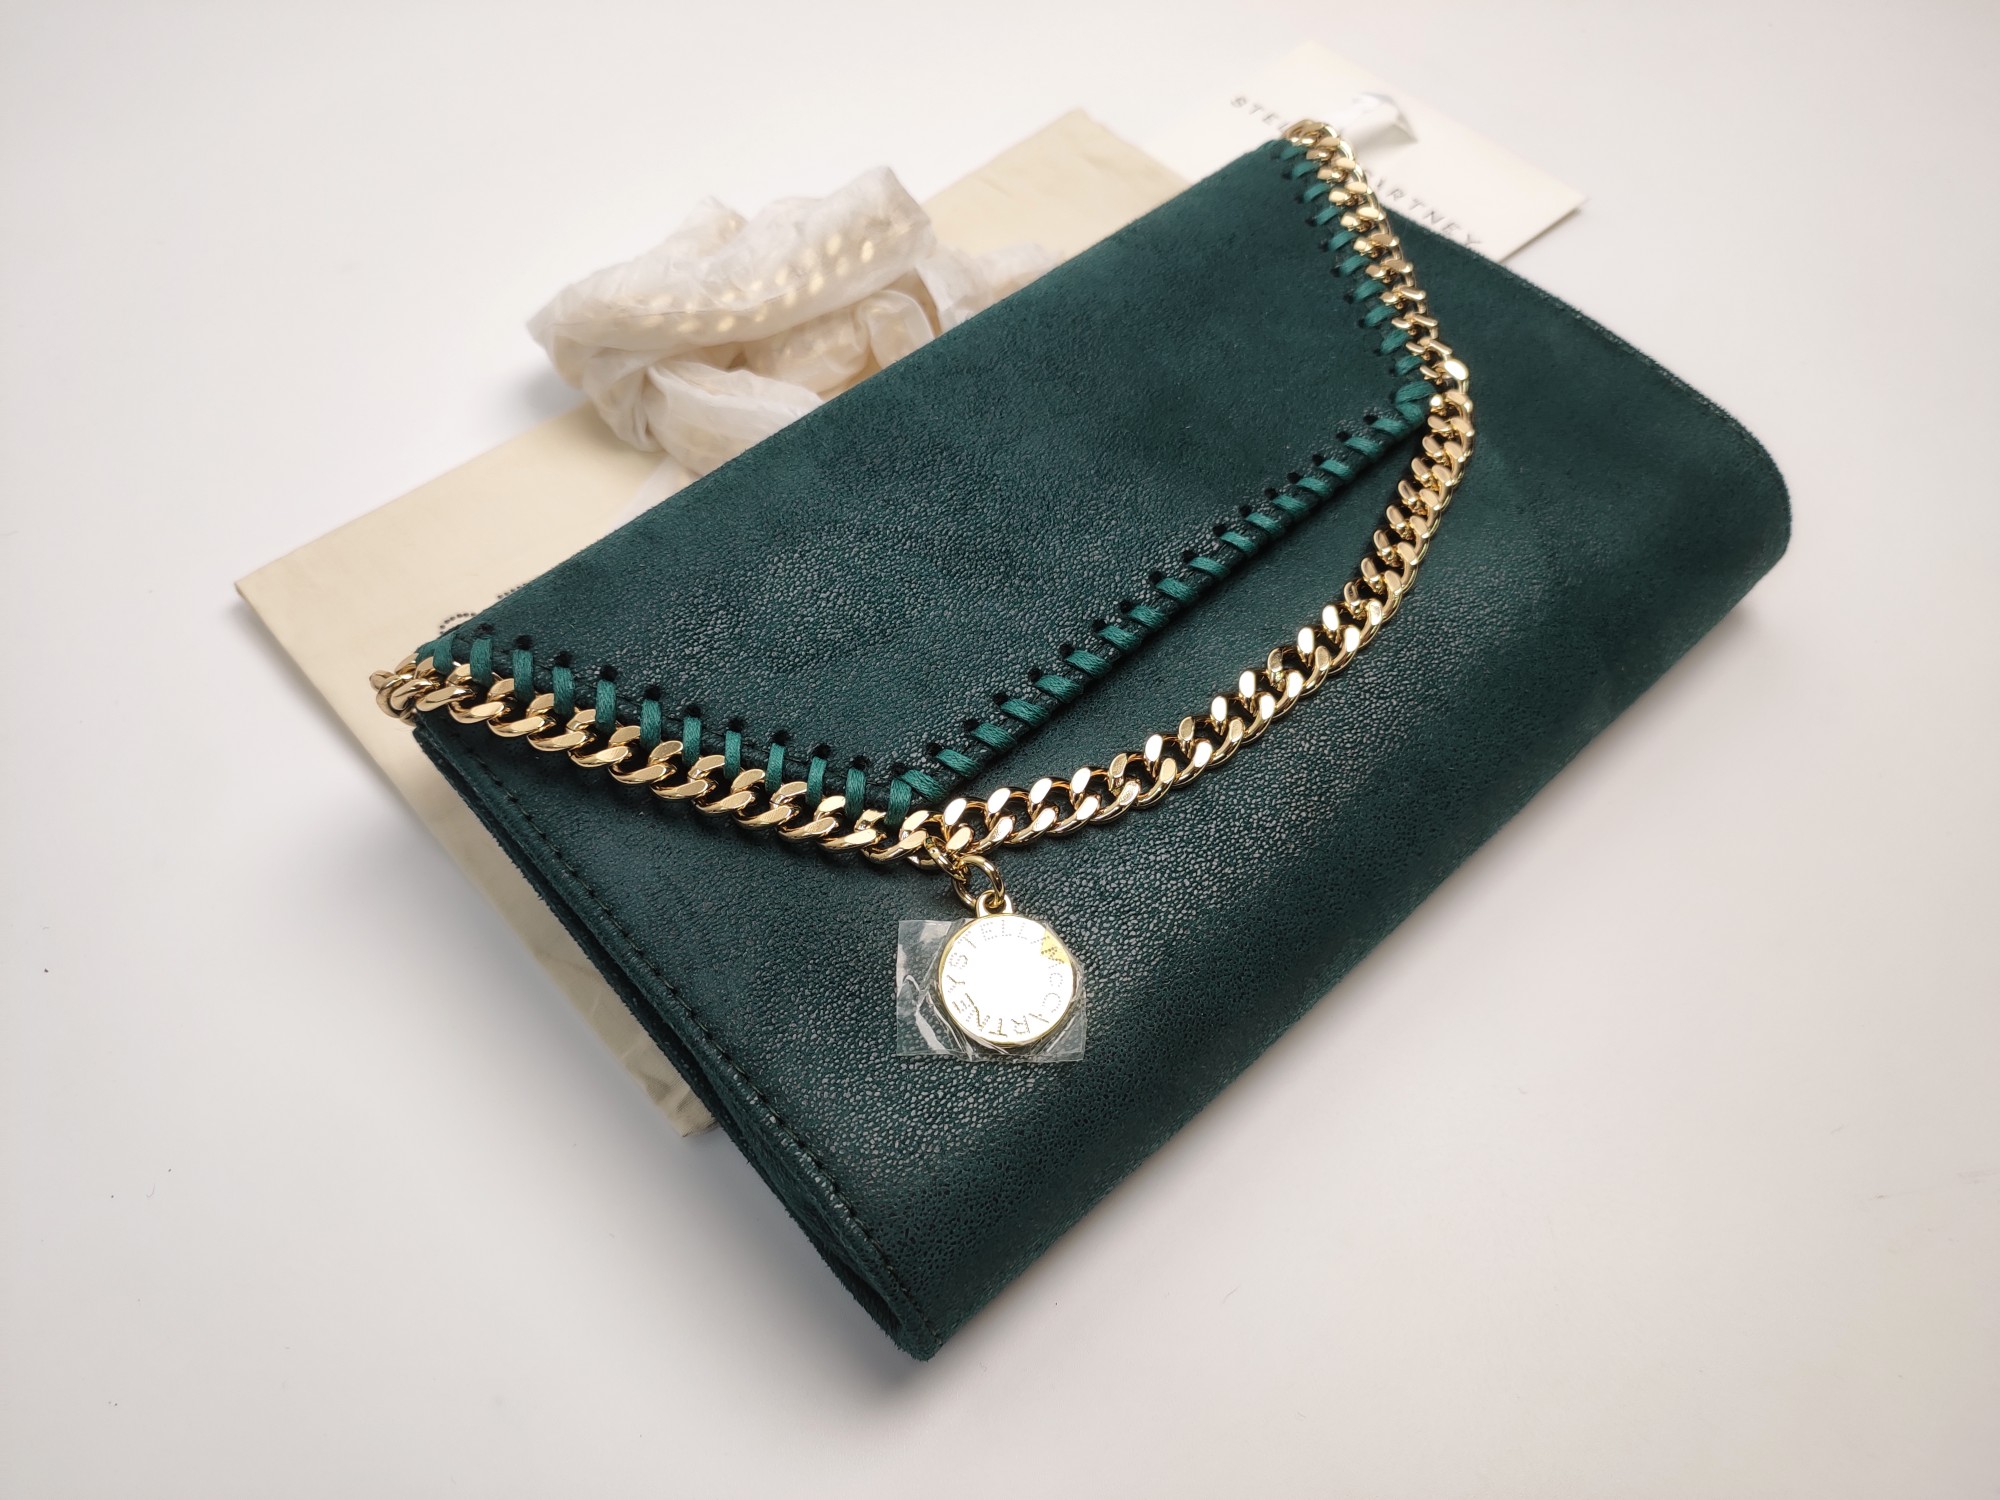 5A New Fashion women Handbag shoulder bag Stella McCartney PVC high quality leather shopping bag